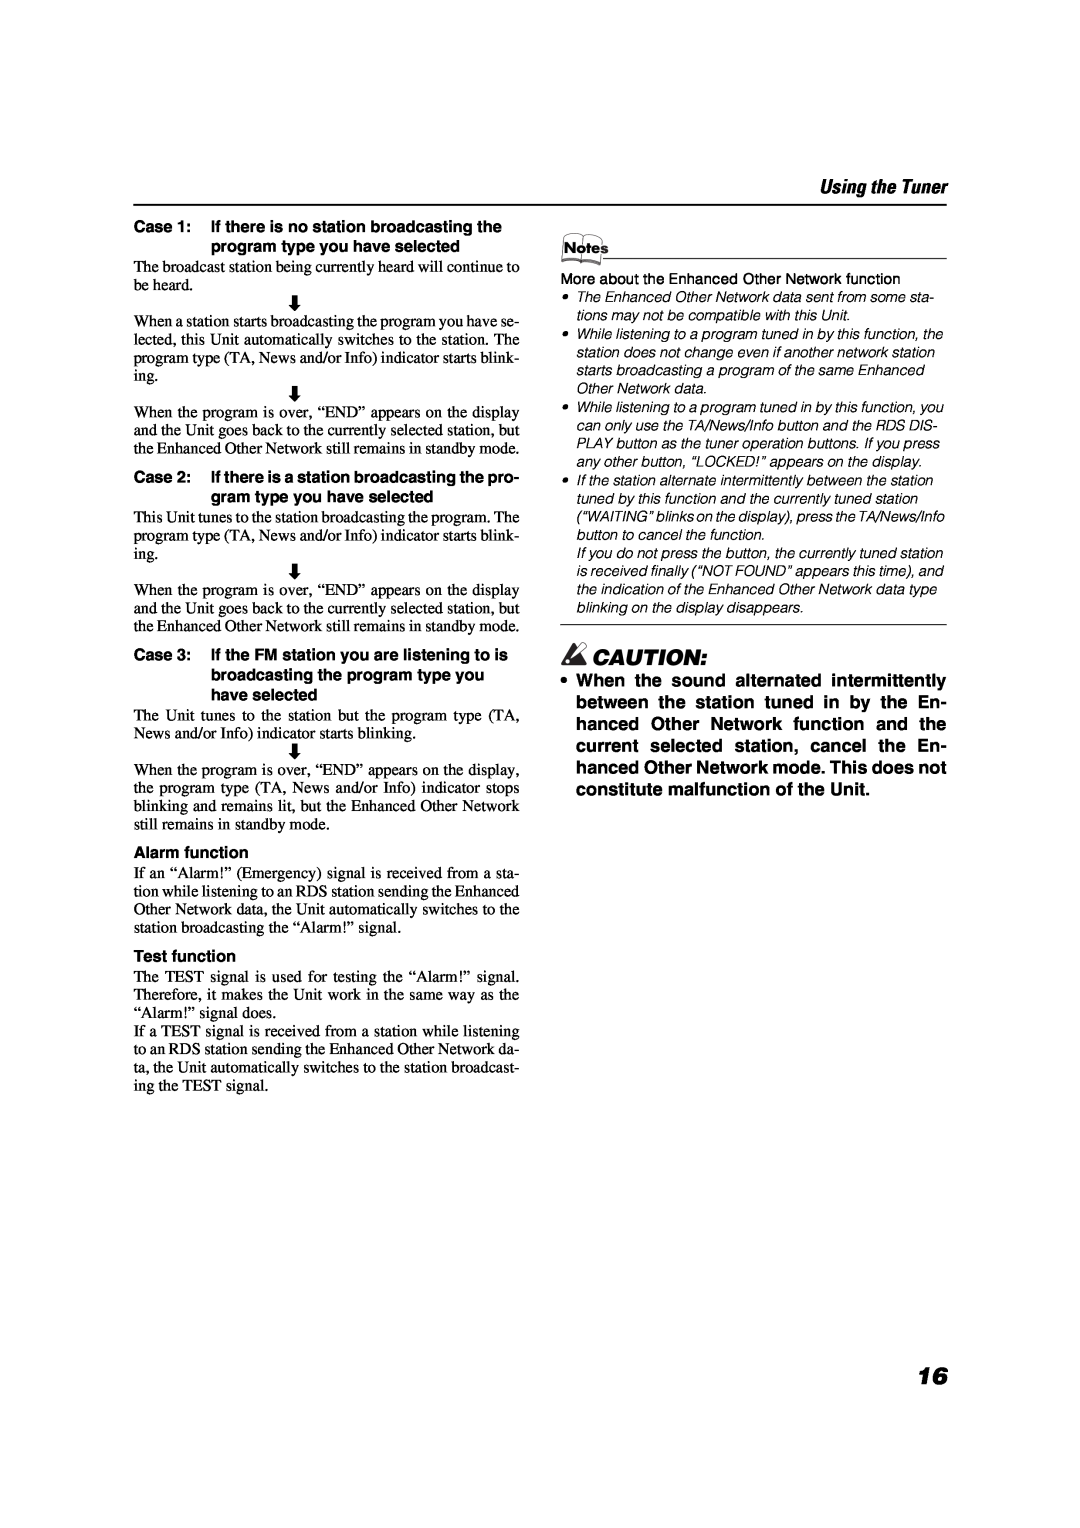 JVC 0403MNMCREJEM, LVT1041-002A manual Using the Tuner, Alarm function 